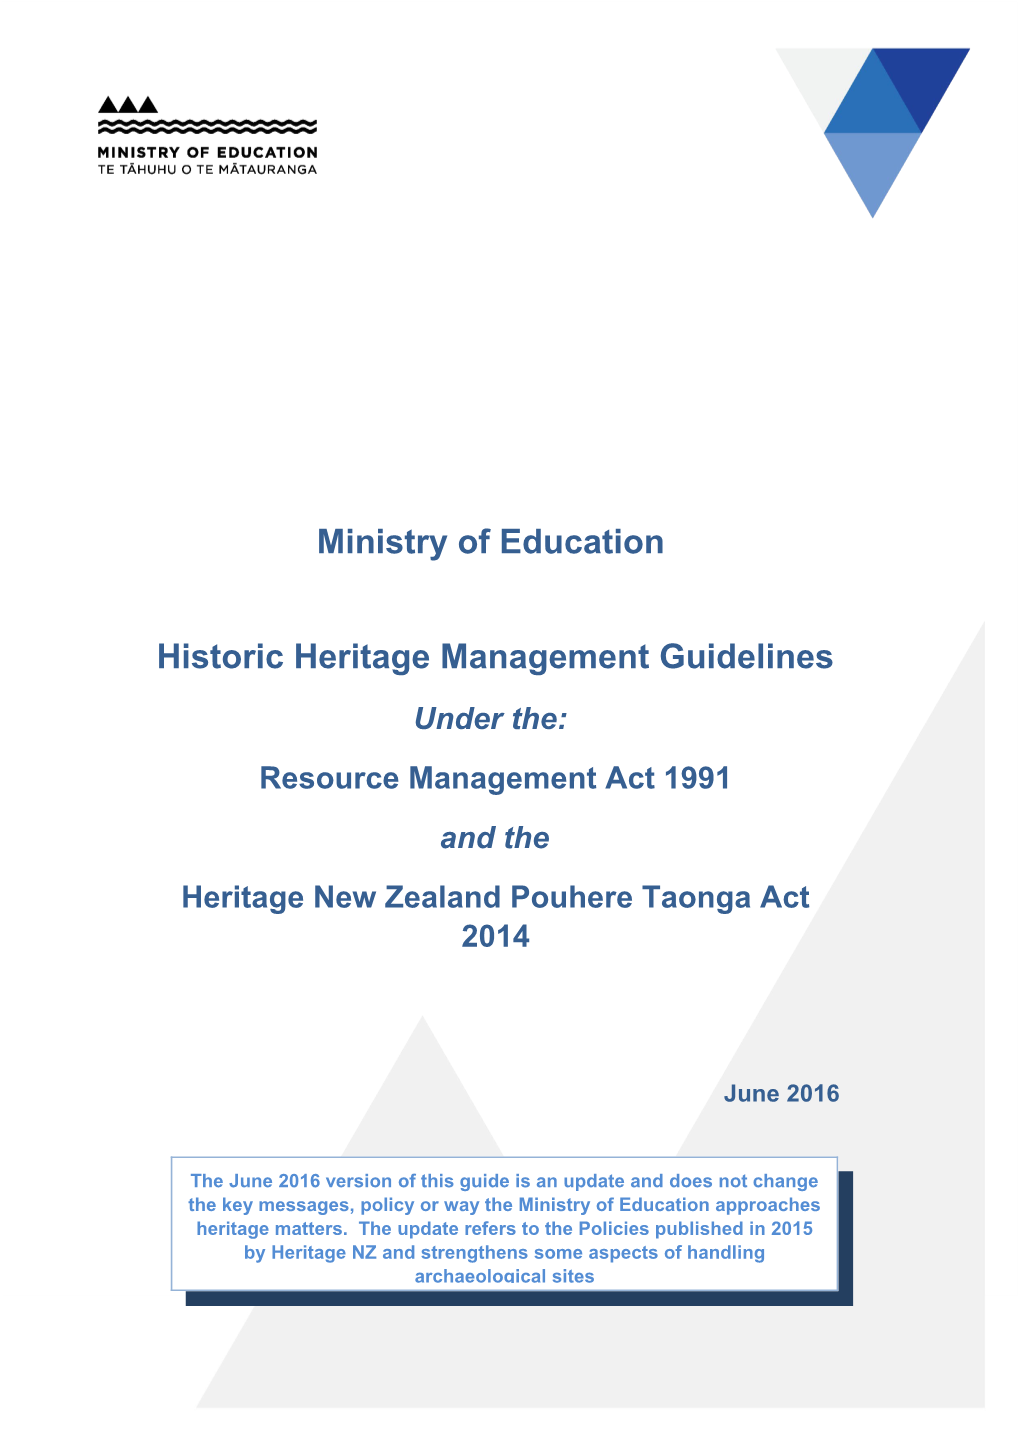 Heritage Management Guidelines